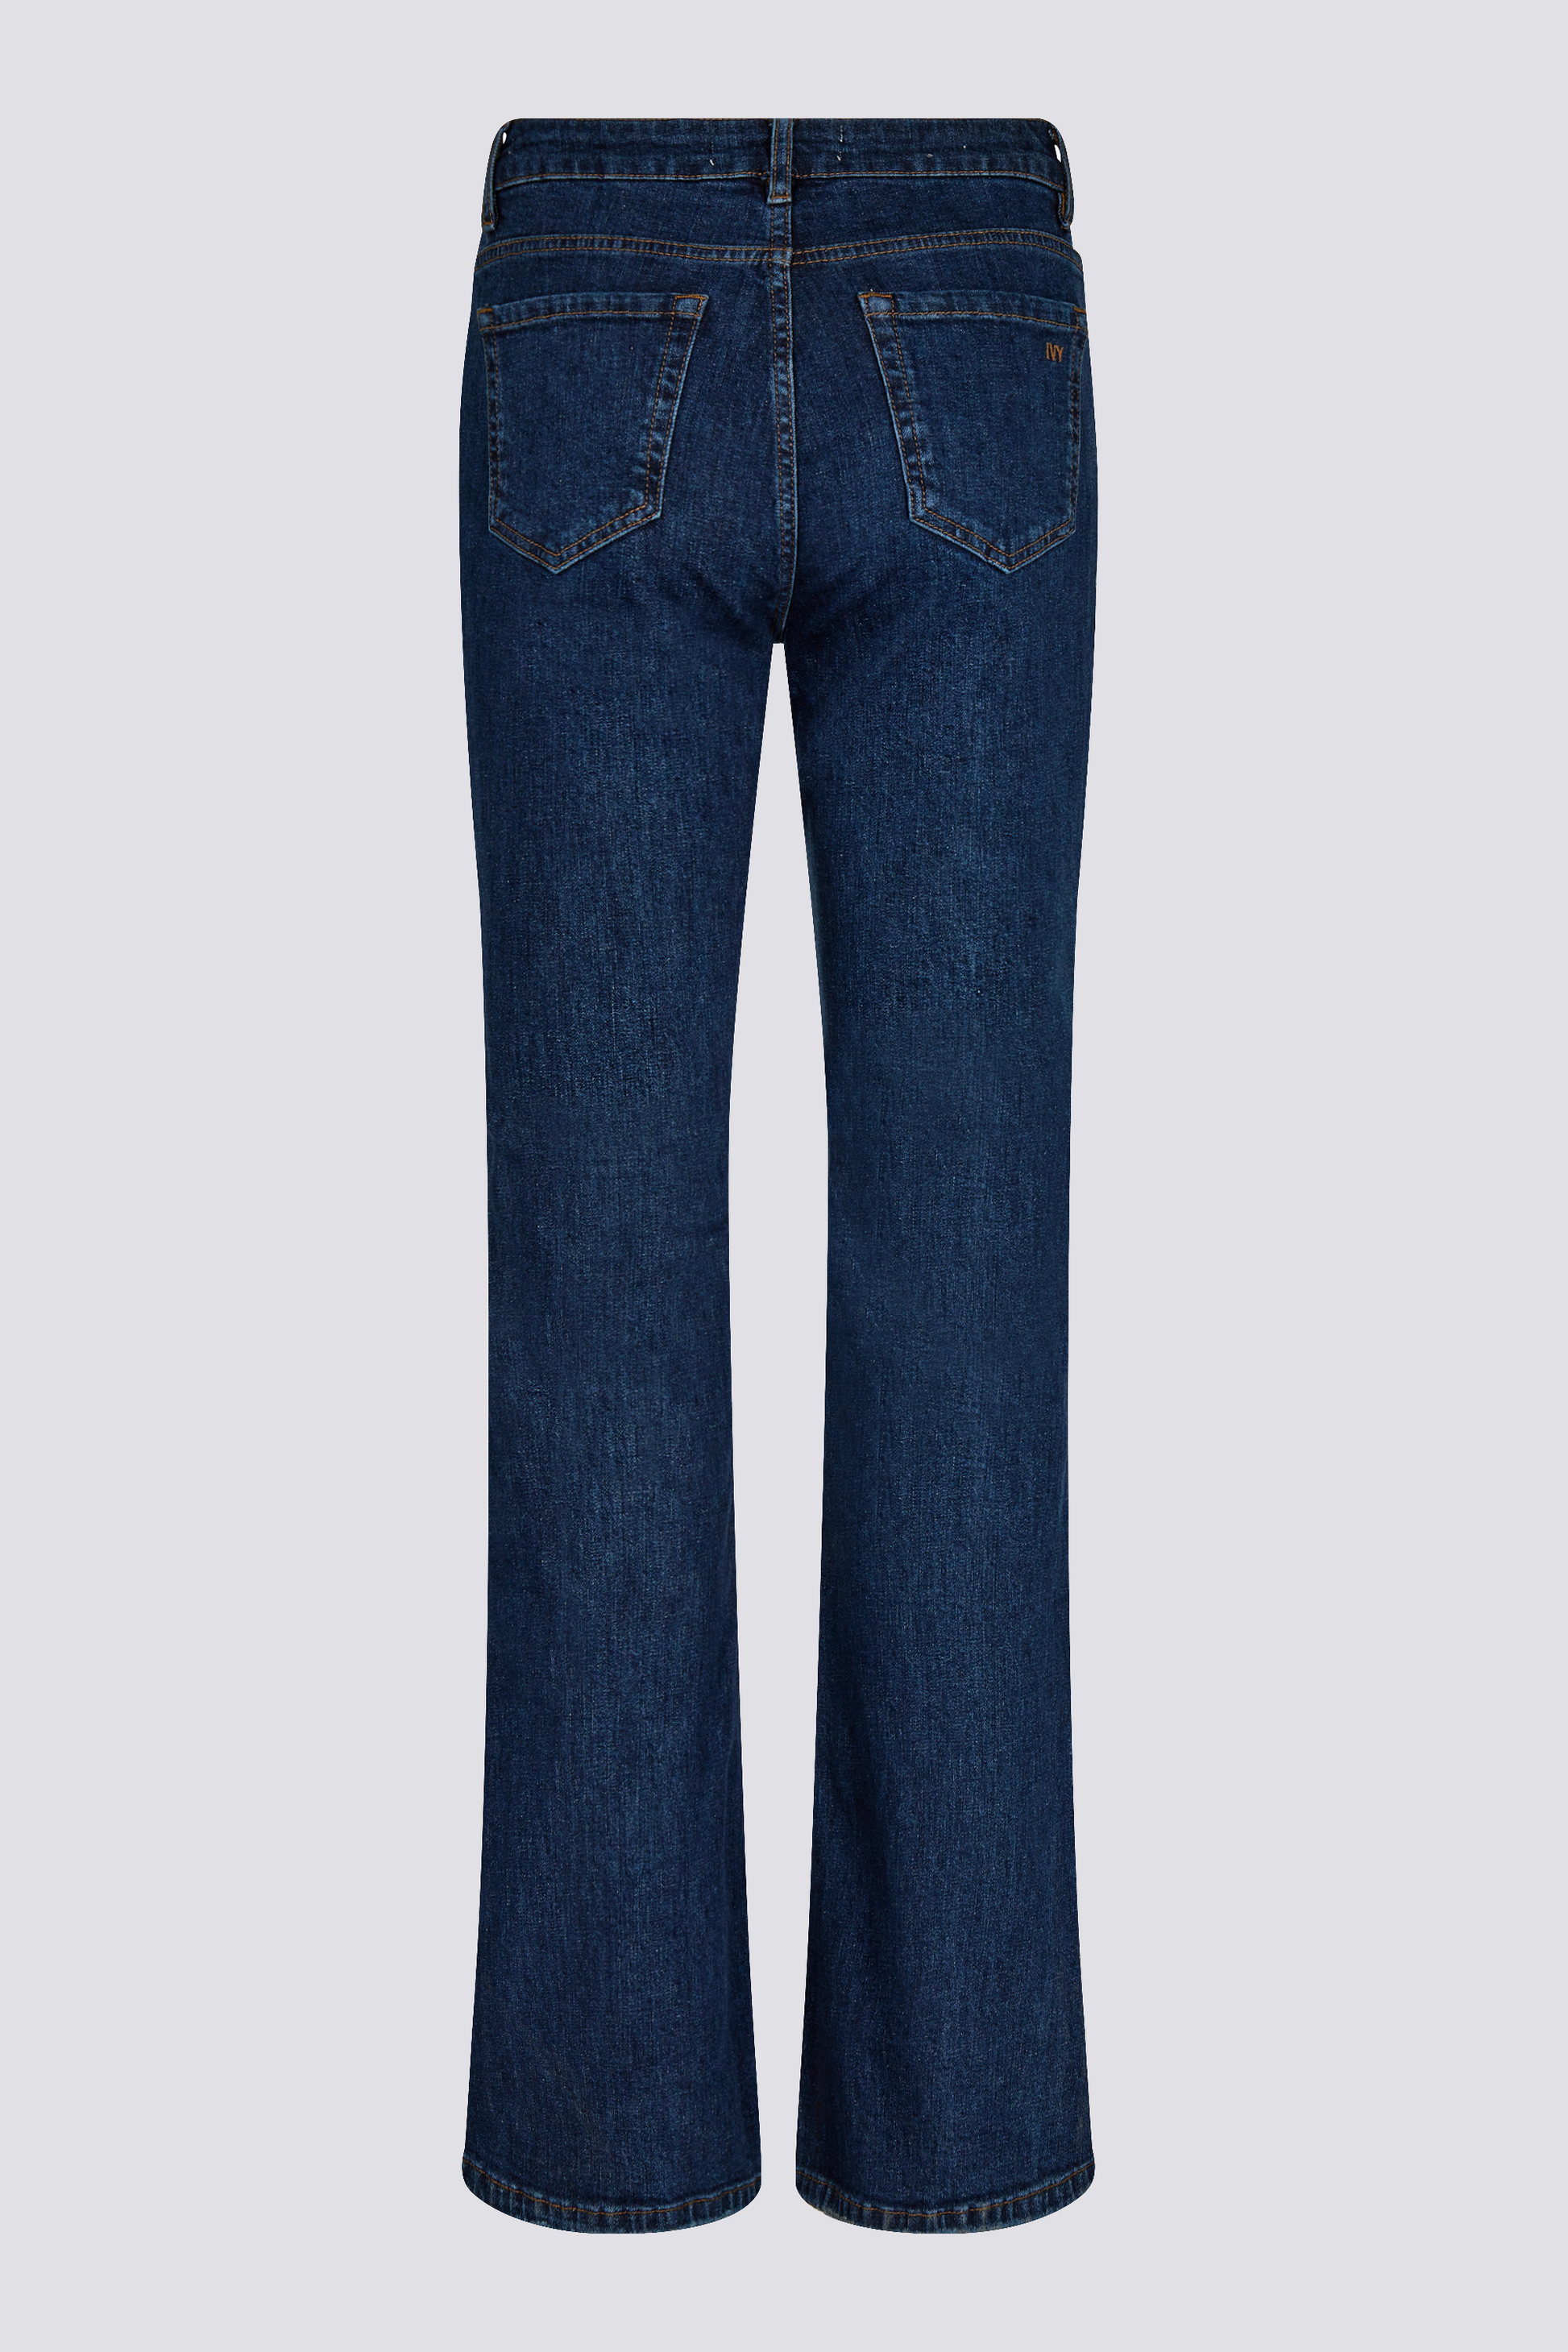 IVY Copenhagen IVY-Charlotte Jeans Wash Edinburg Jeans & Pants